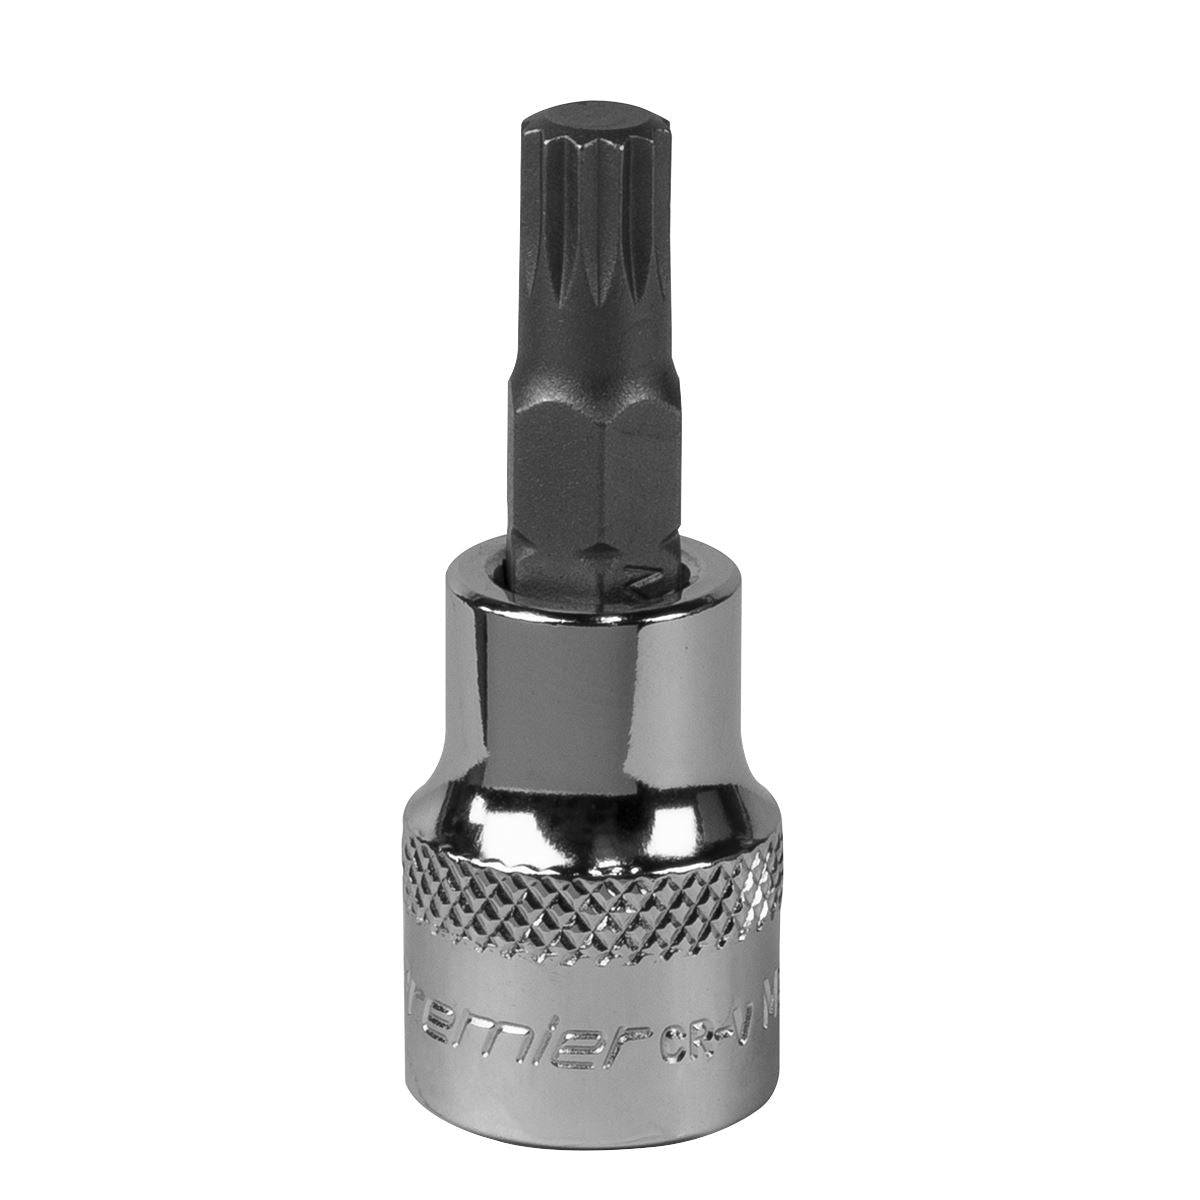 Sealey Premier Spline Socket Bit M8 3/8"Sq Drive